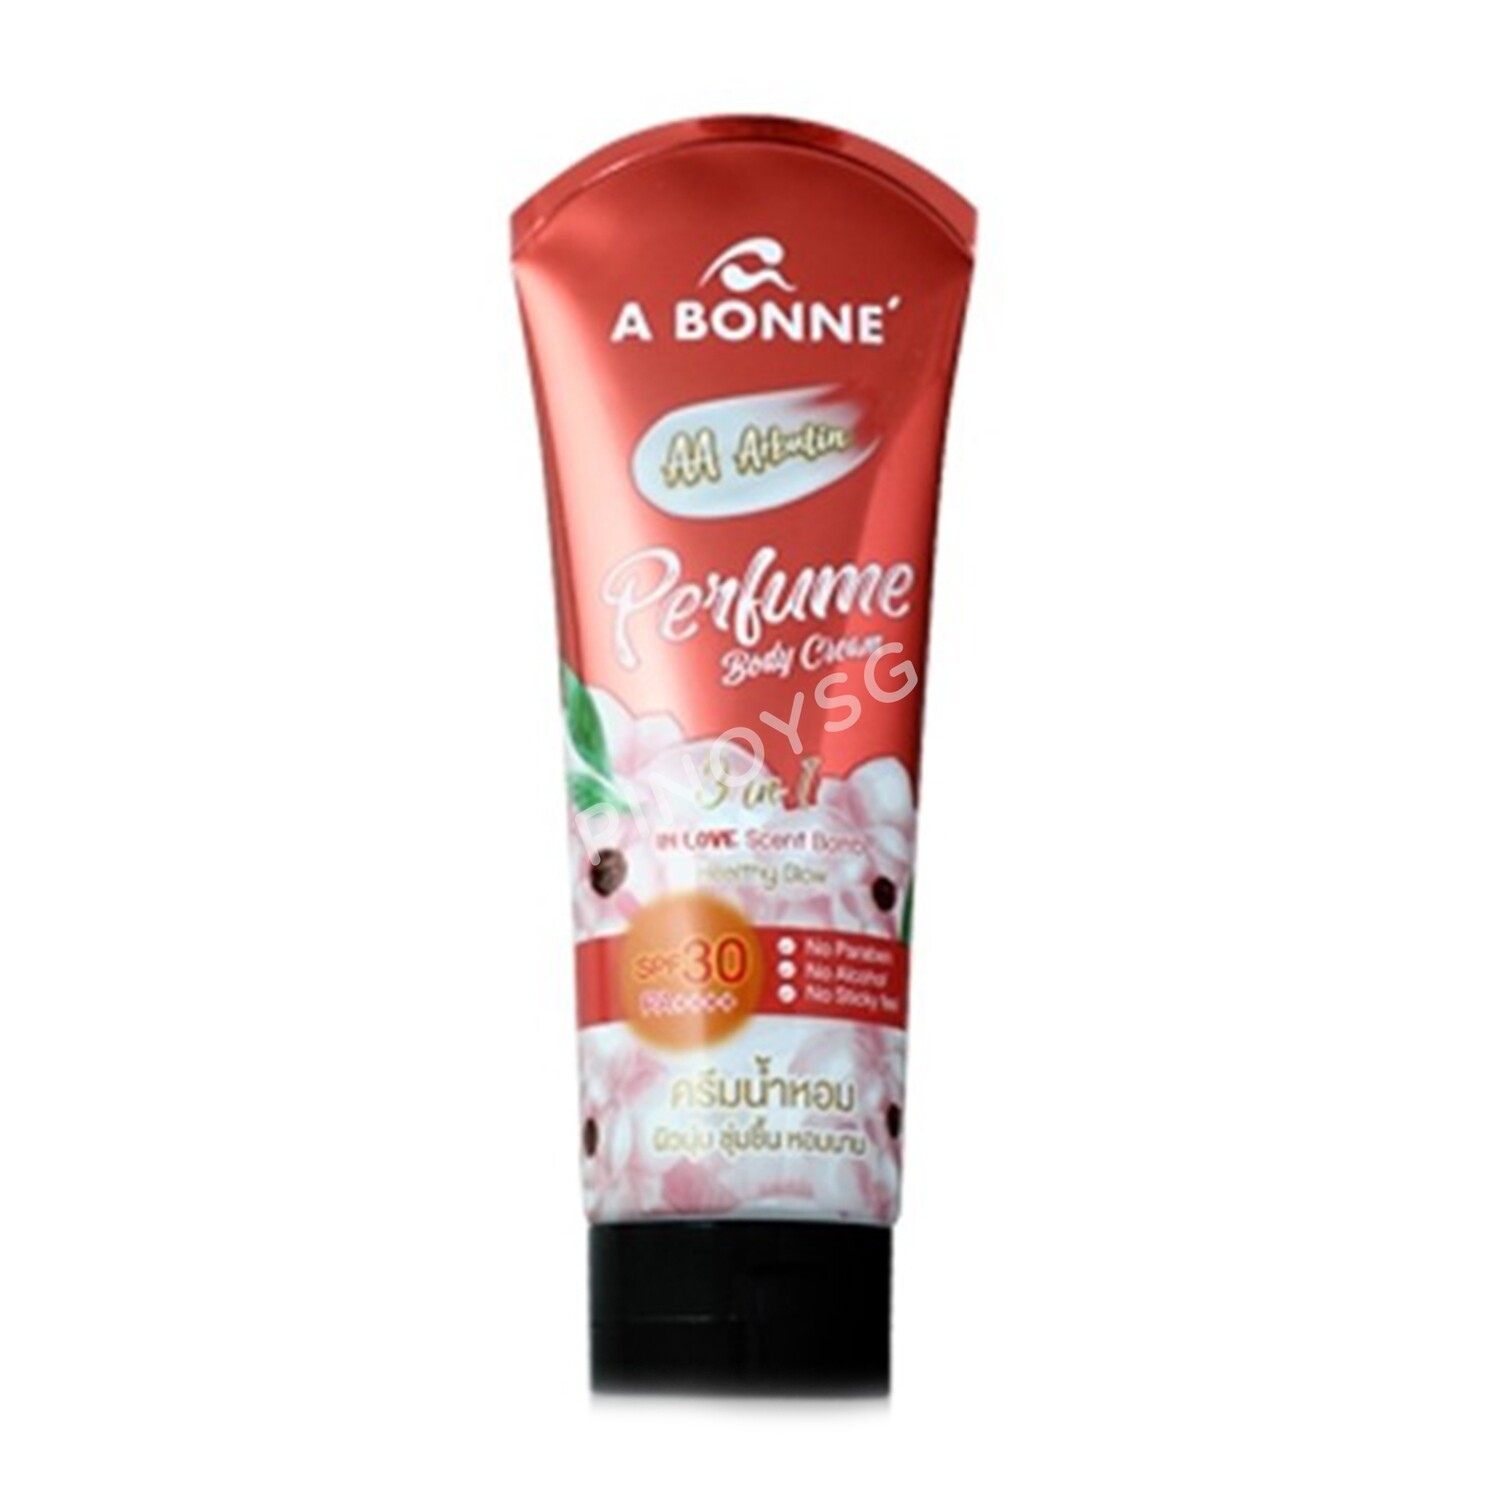 A Bonne AA Arbutin Perfume Body Cream Milk Inlove Scent Bomb